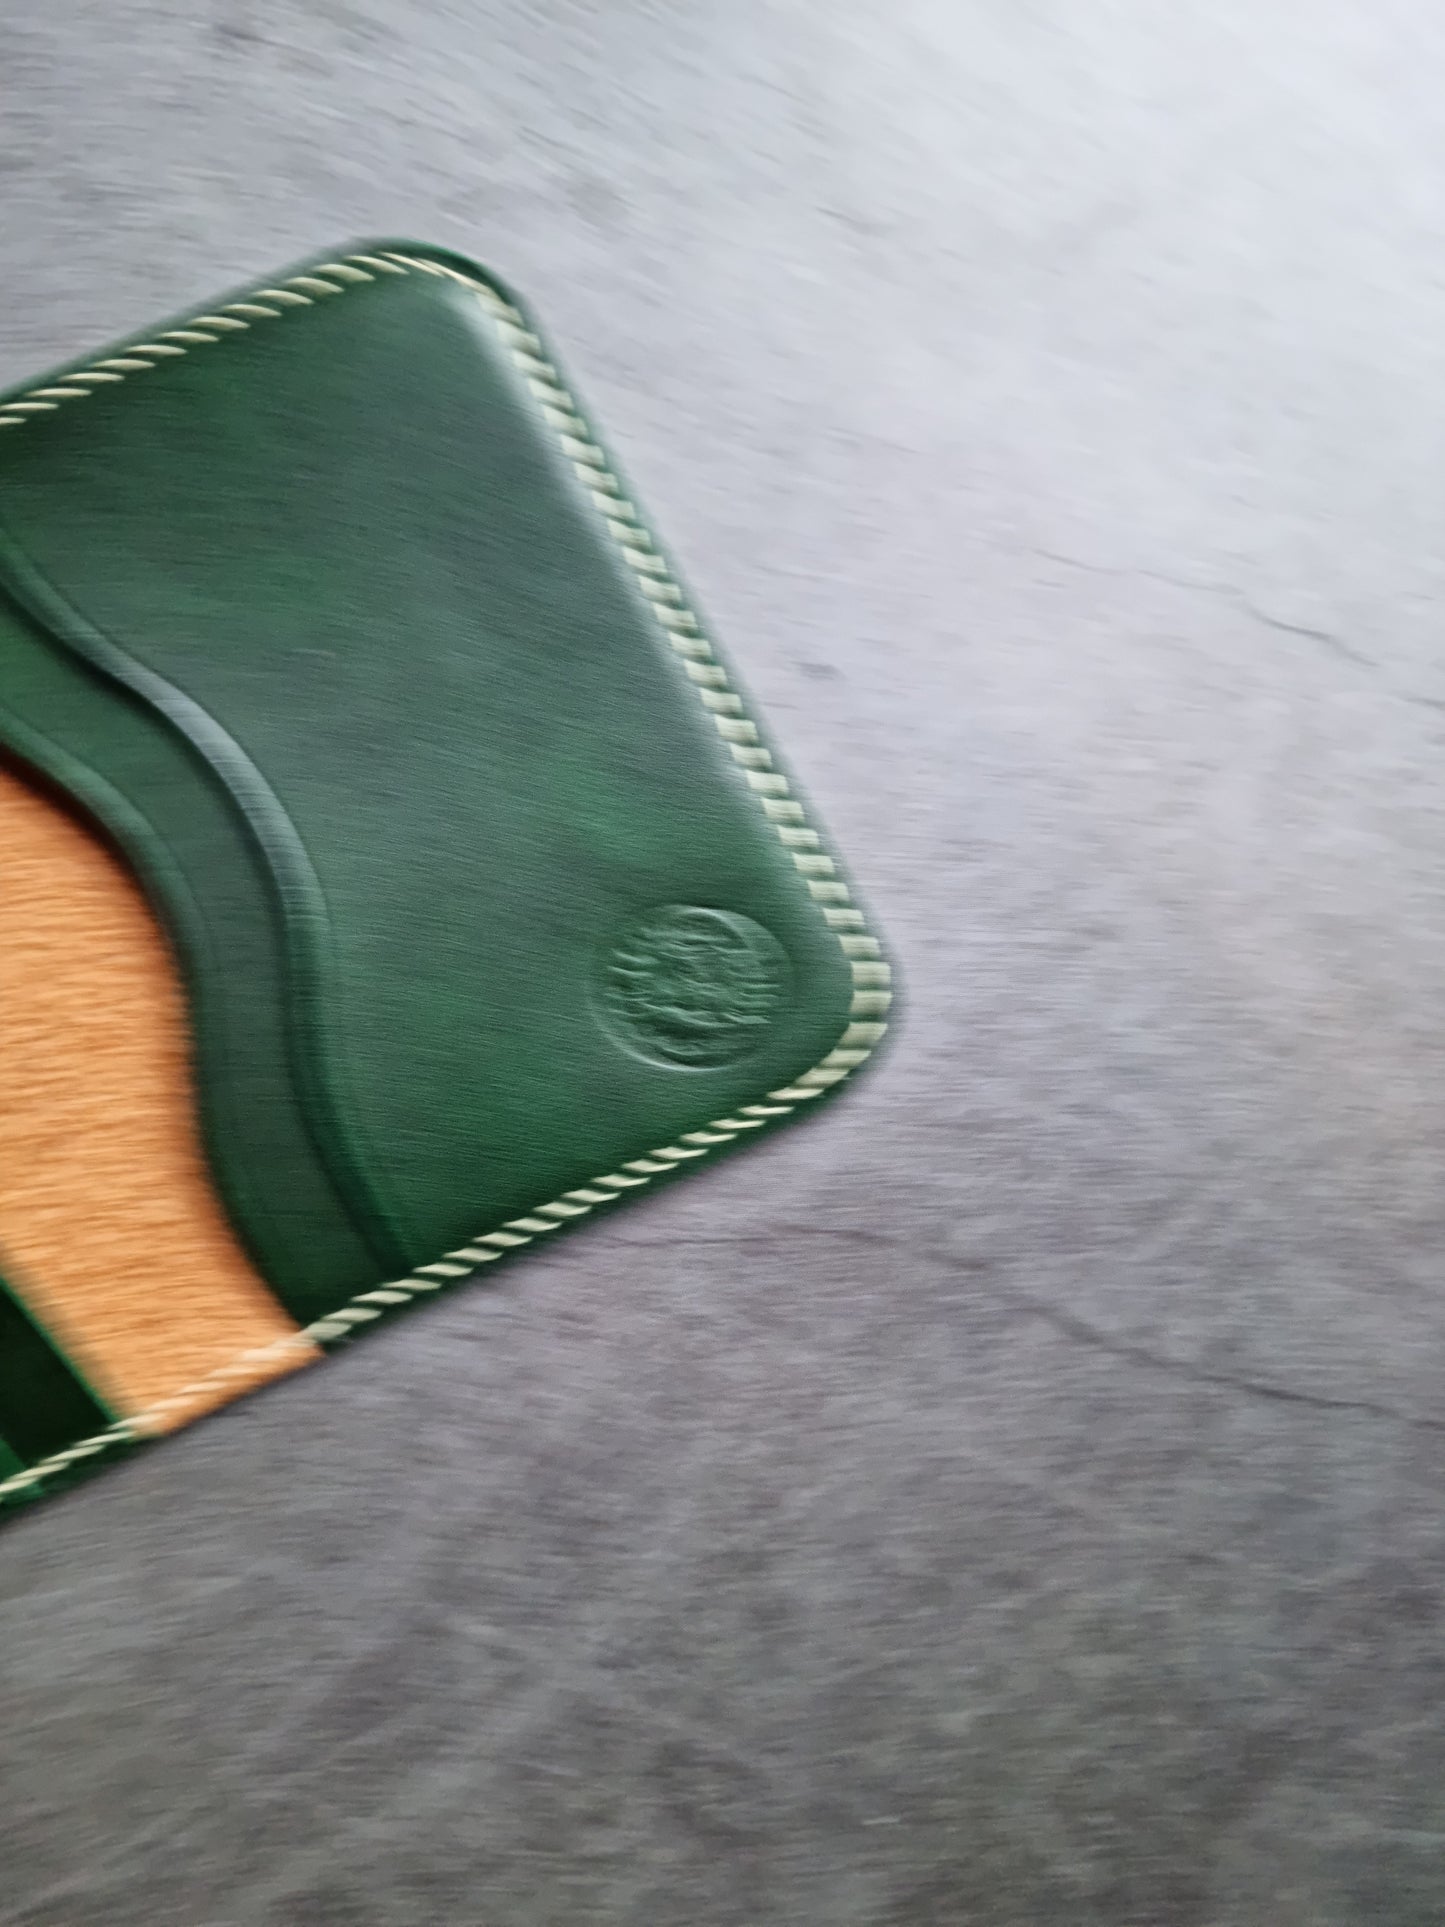 Toronto slim wallet - Template - PDF Pattern